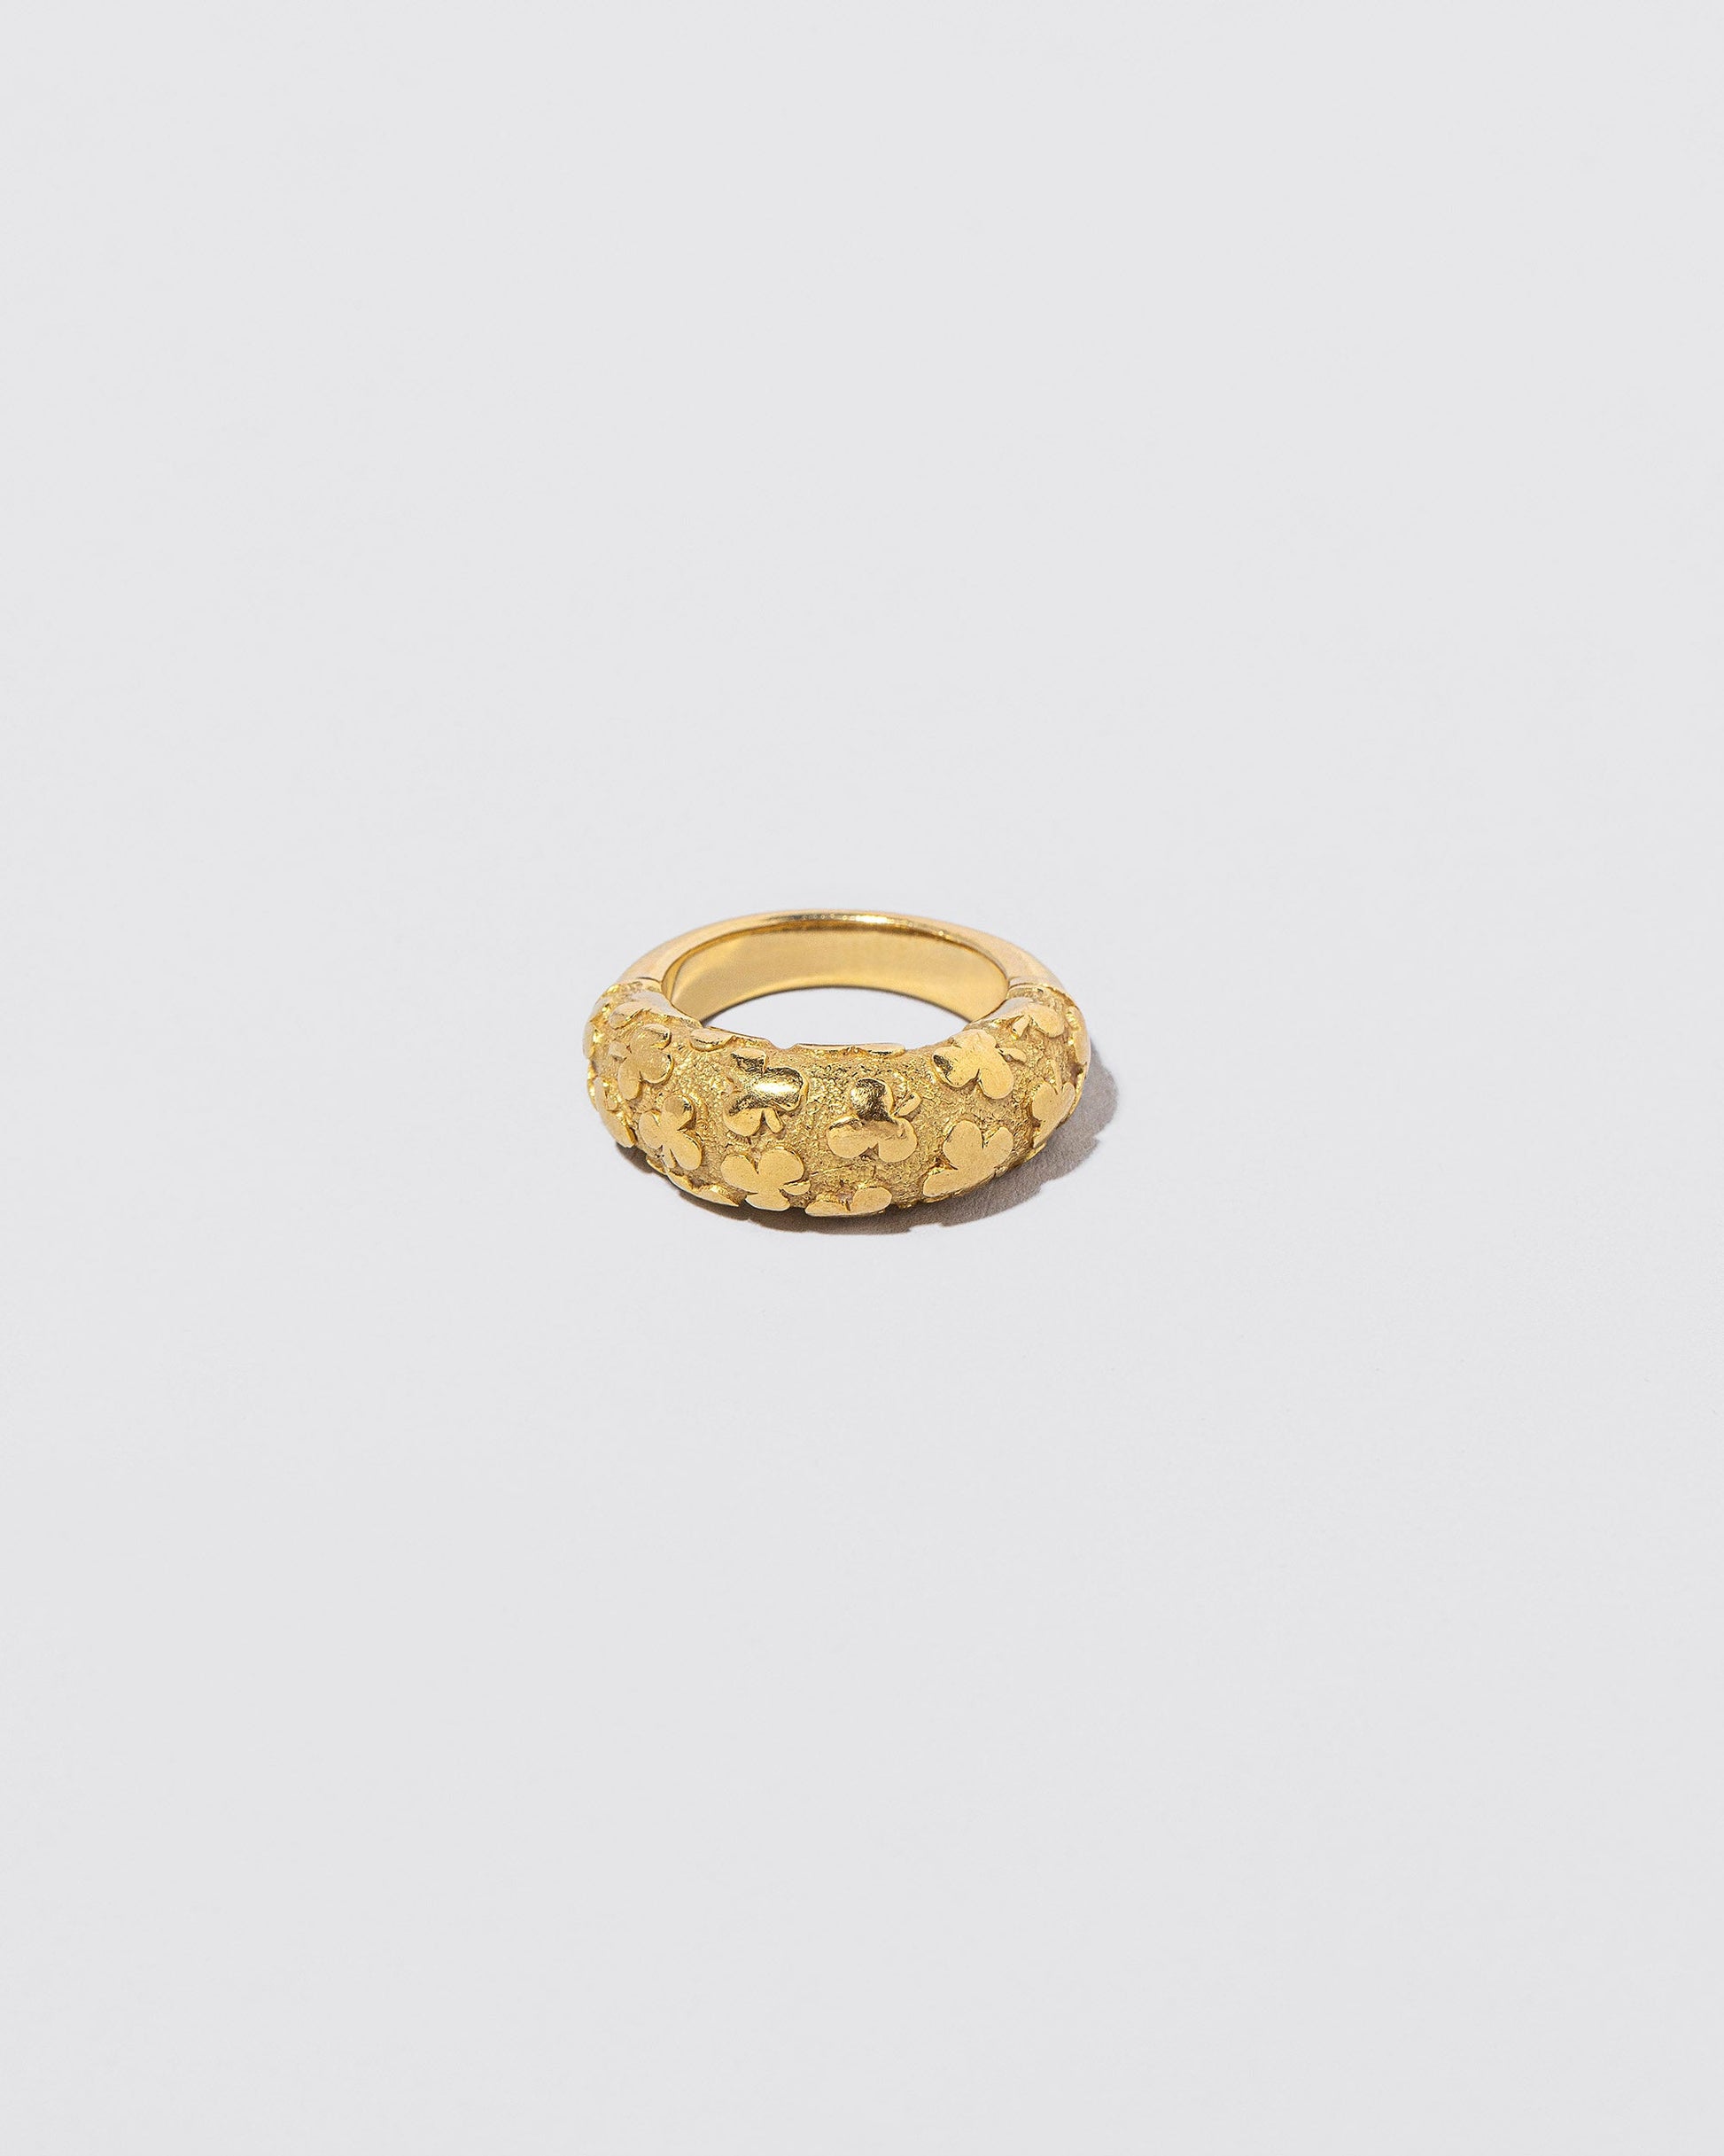  Clover Ring on light color background.